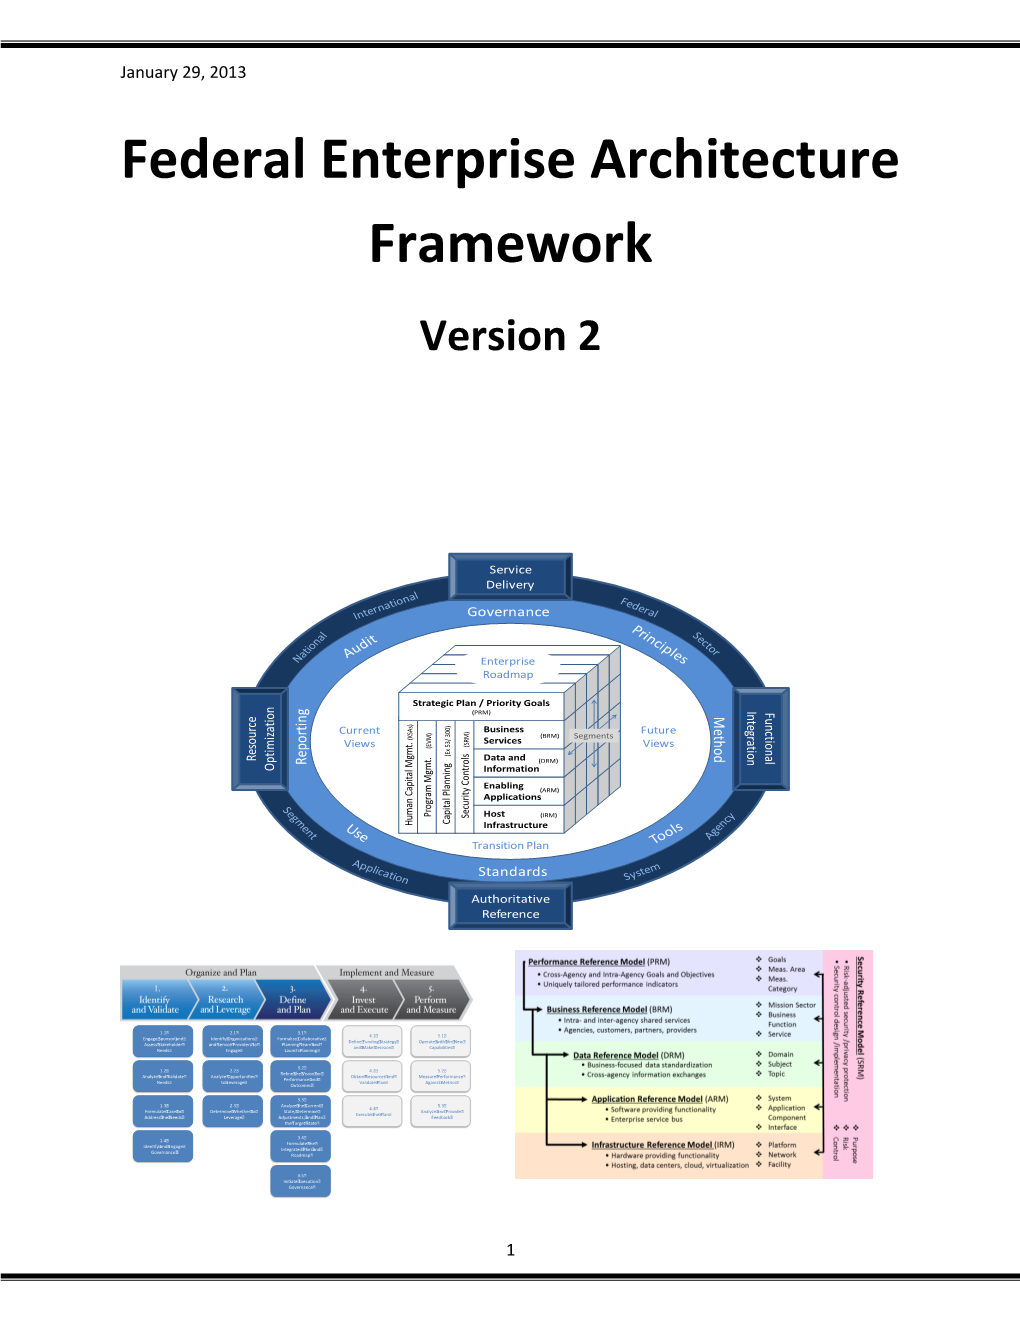 Federal Enterprise Architecture Framework Version 2